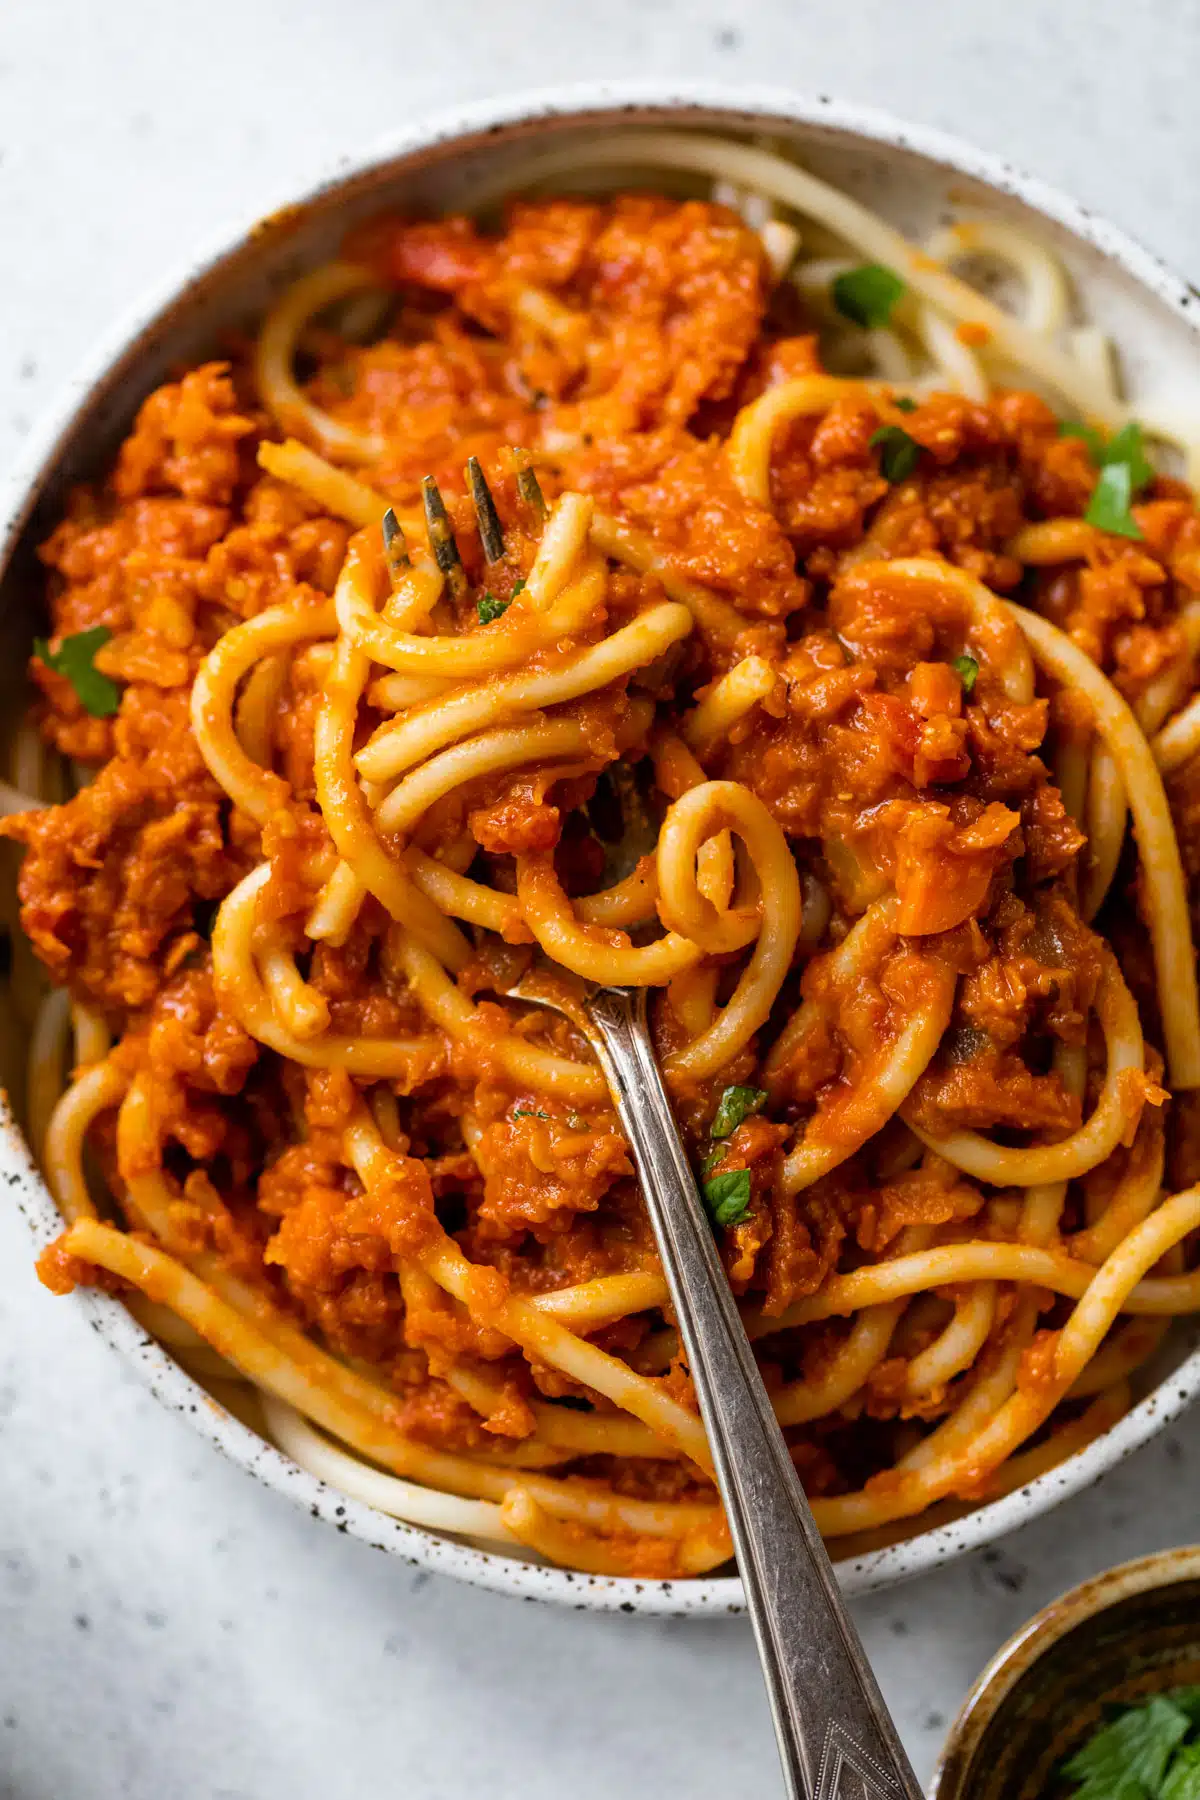 a fork twirled around pasta and pasta sauce